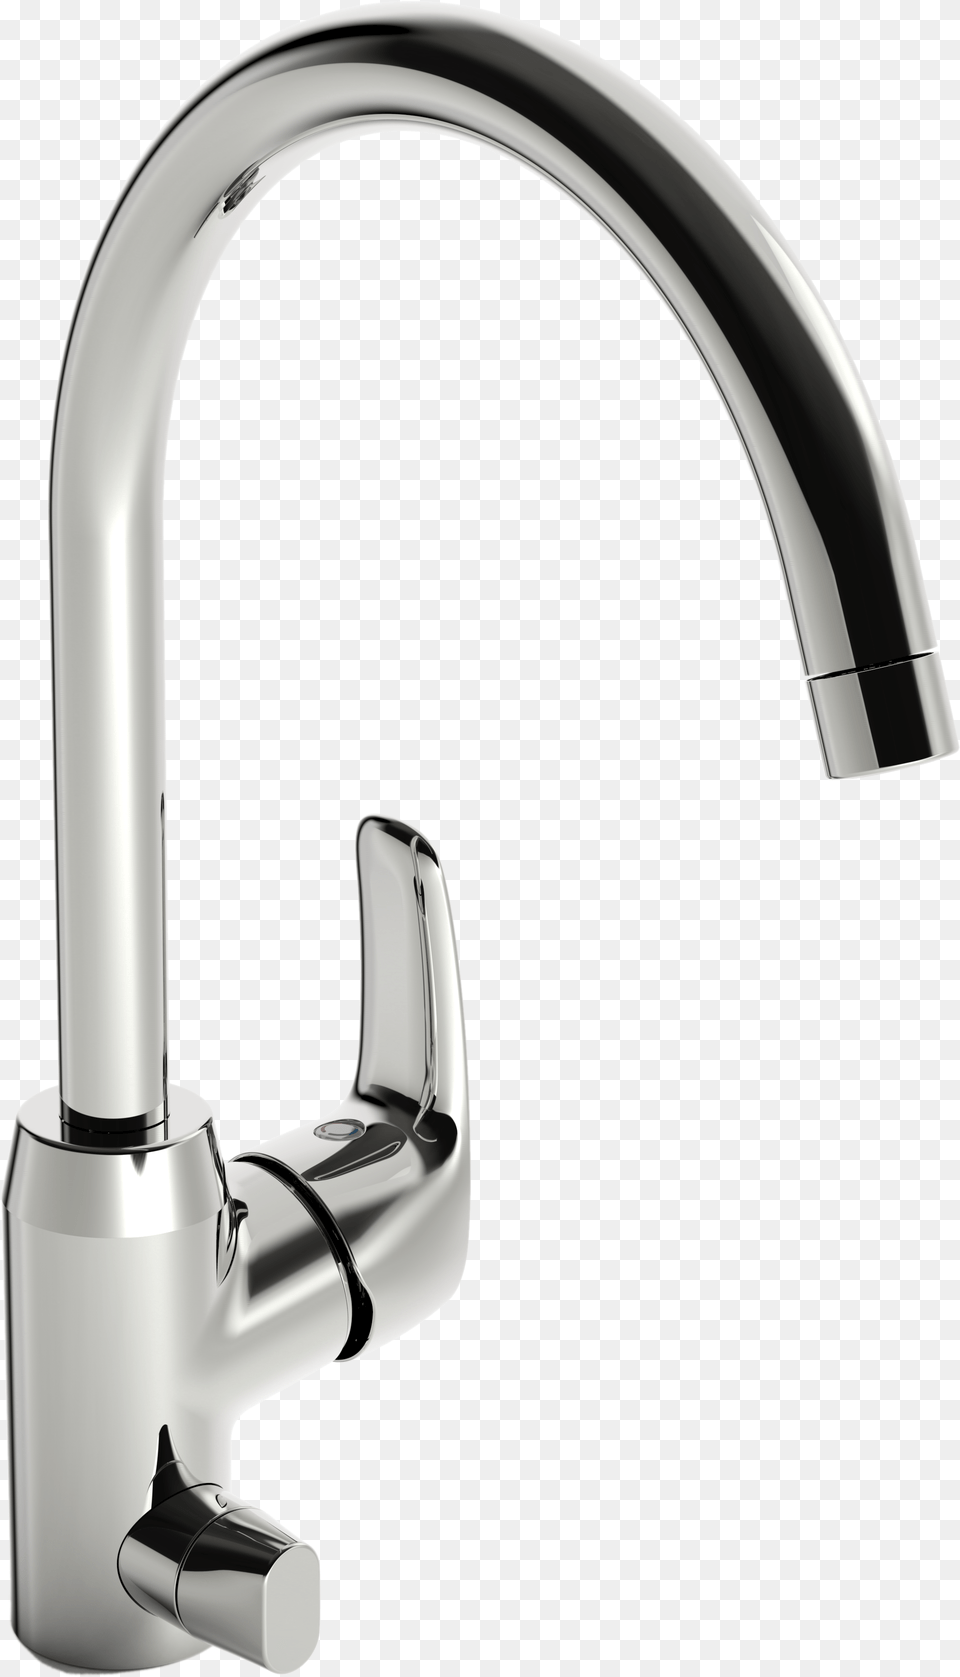 Oras Safira Kitchen Faucet With Dishwasher Valve Oras Keittihana, Sink, Sink Faucet, Tap, Bathroom Free Transparent Png